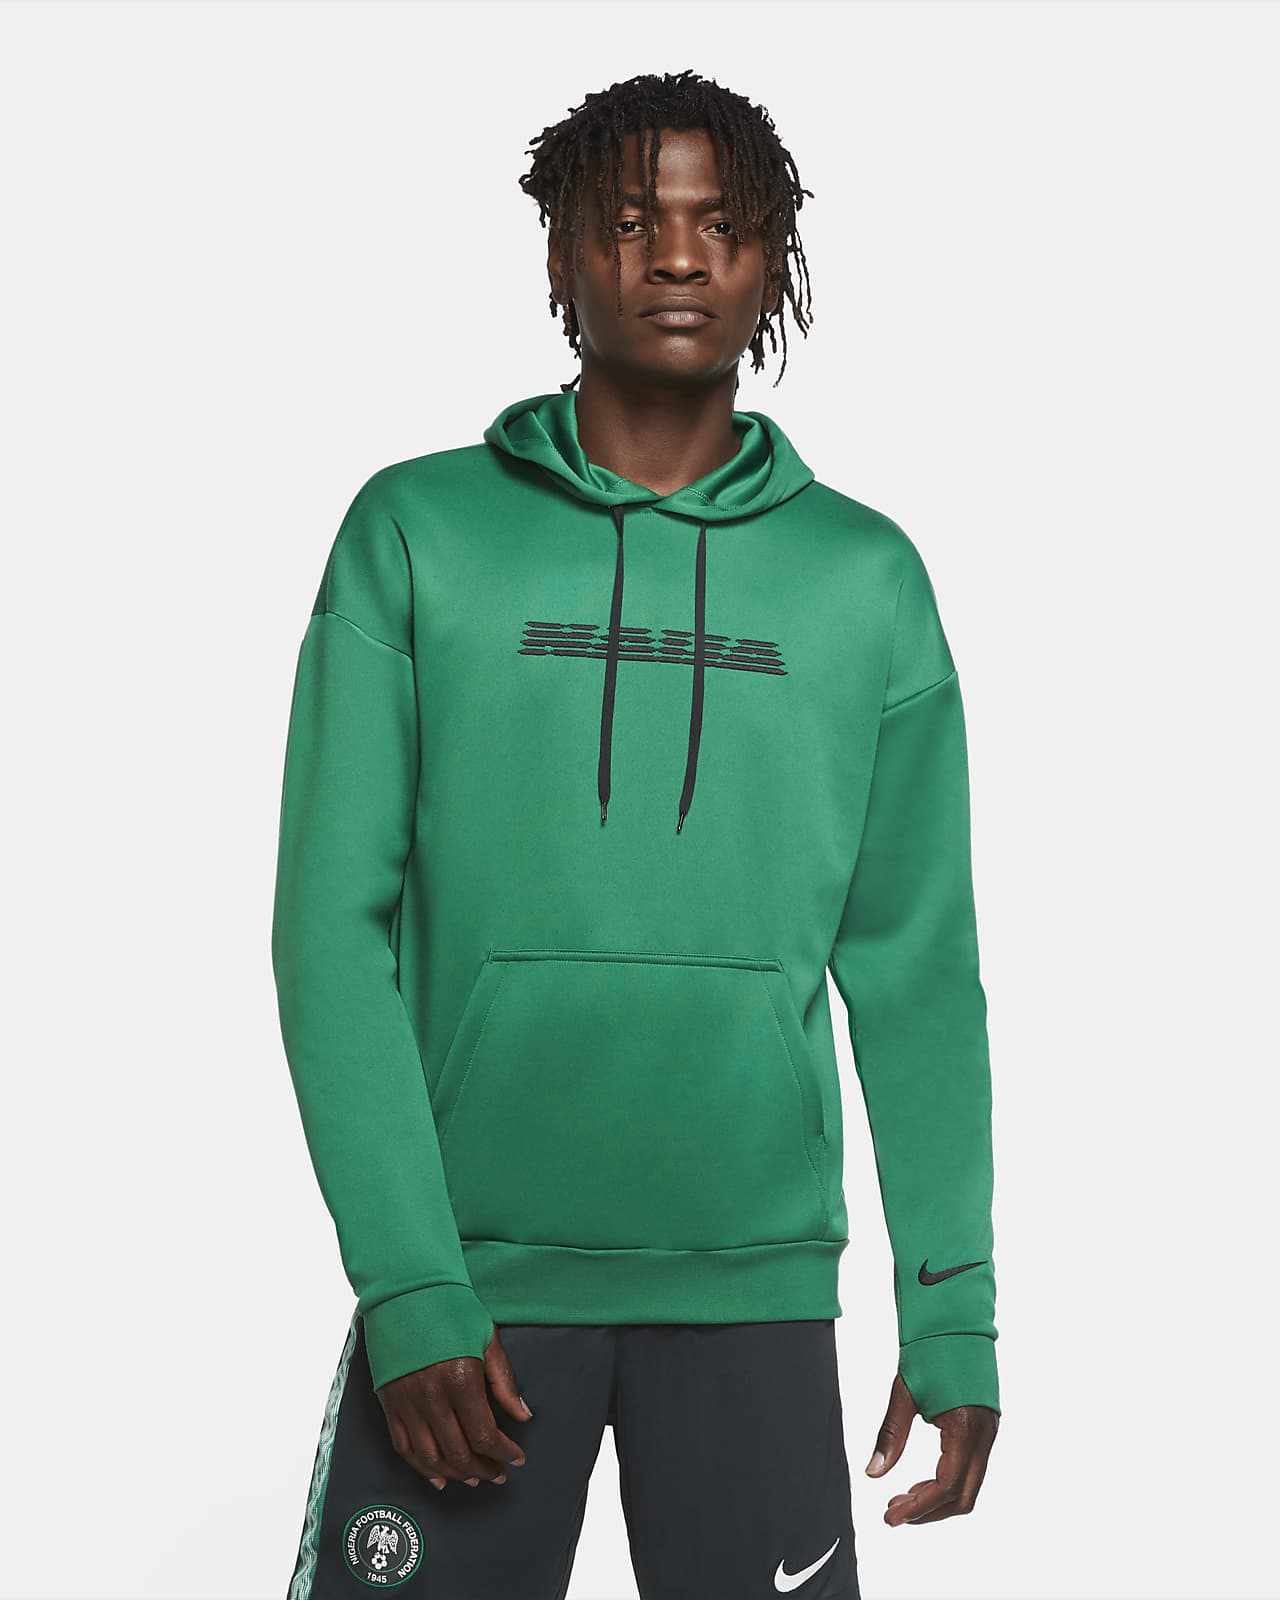 pine green nike sweatshirt